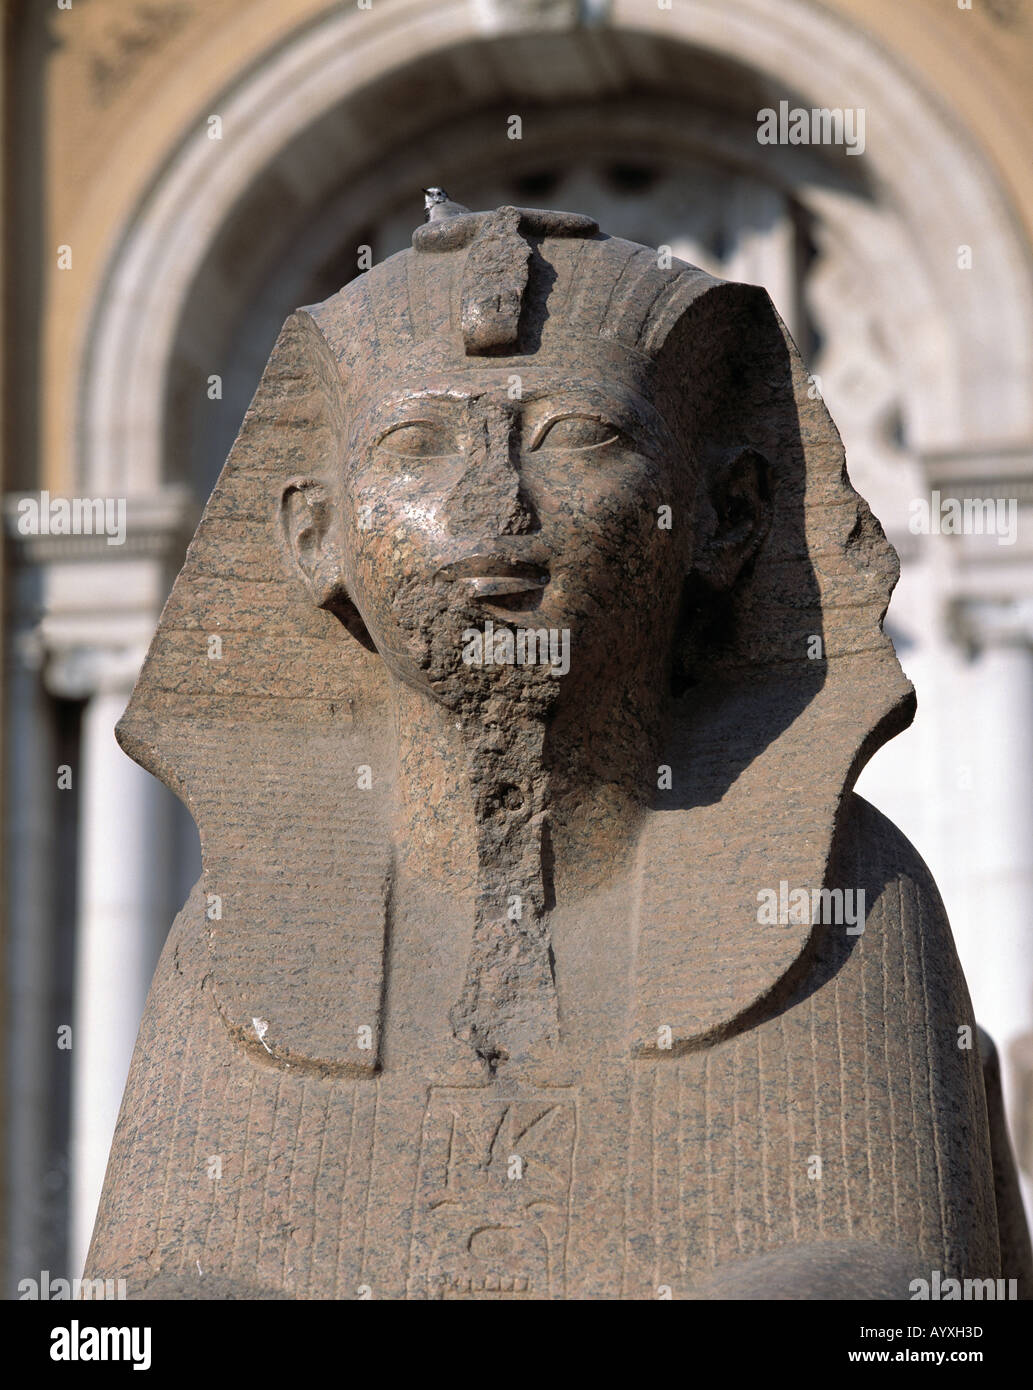 Eingang Aegyptisches Museum, Sphinx, statue, Skulptur, Kairo, Unteraegypten Banque D'Images